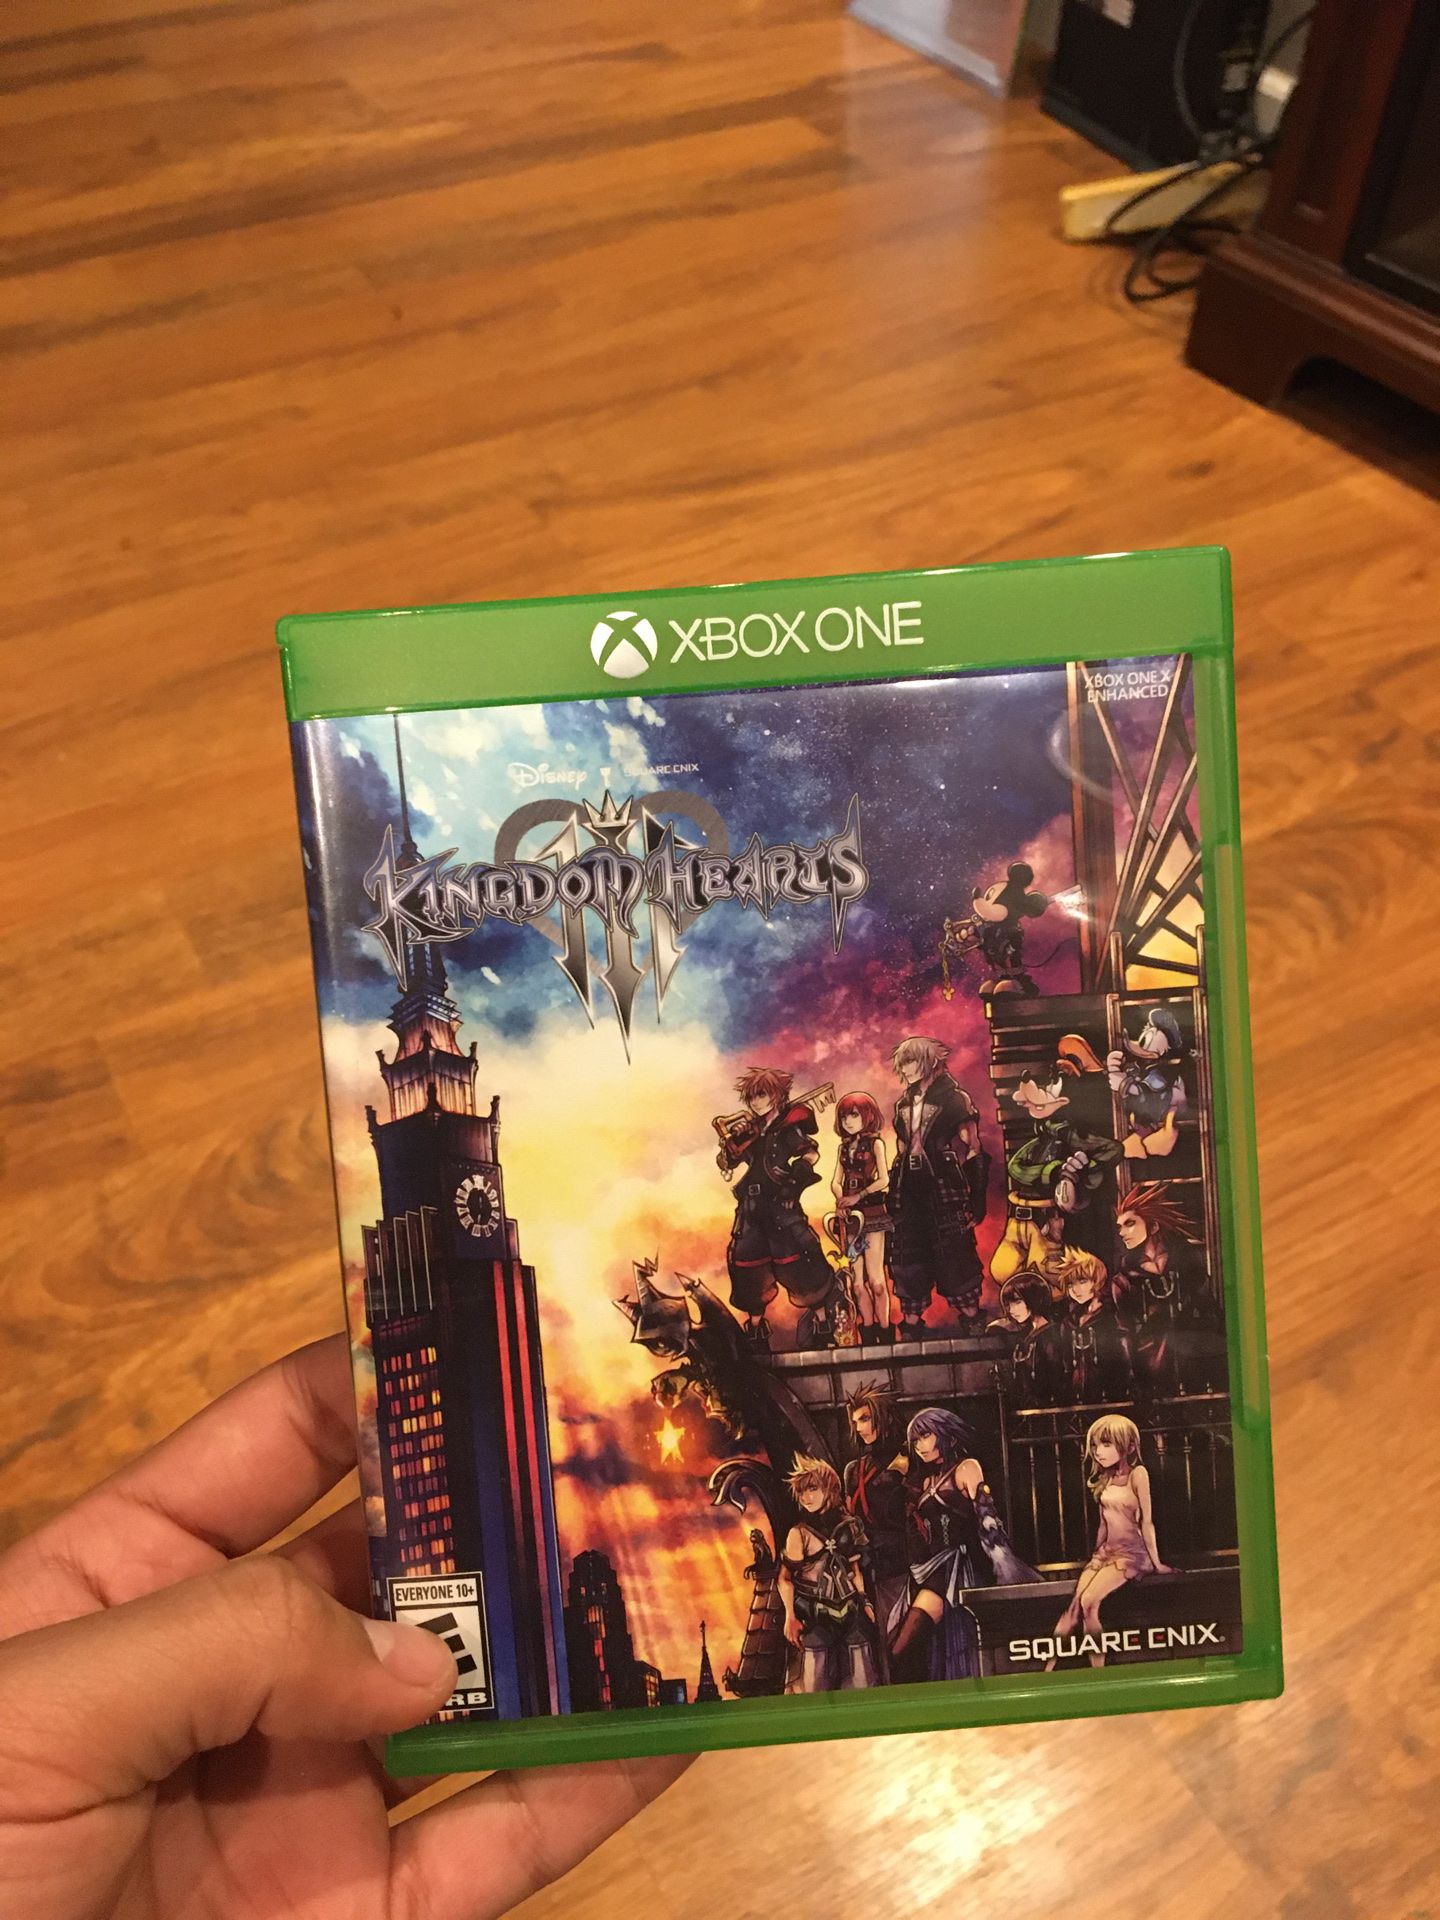 Kingdom hearts 3 for Xbox